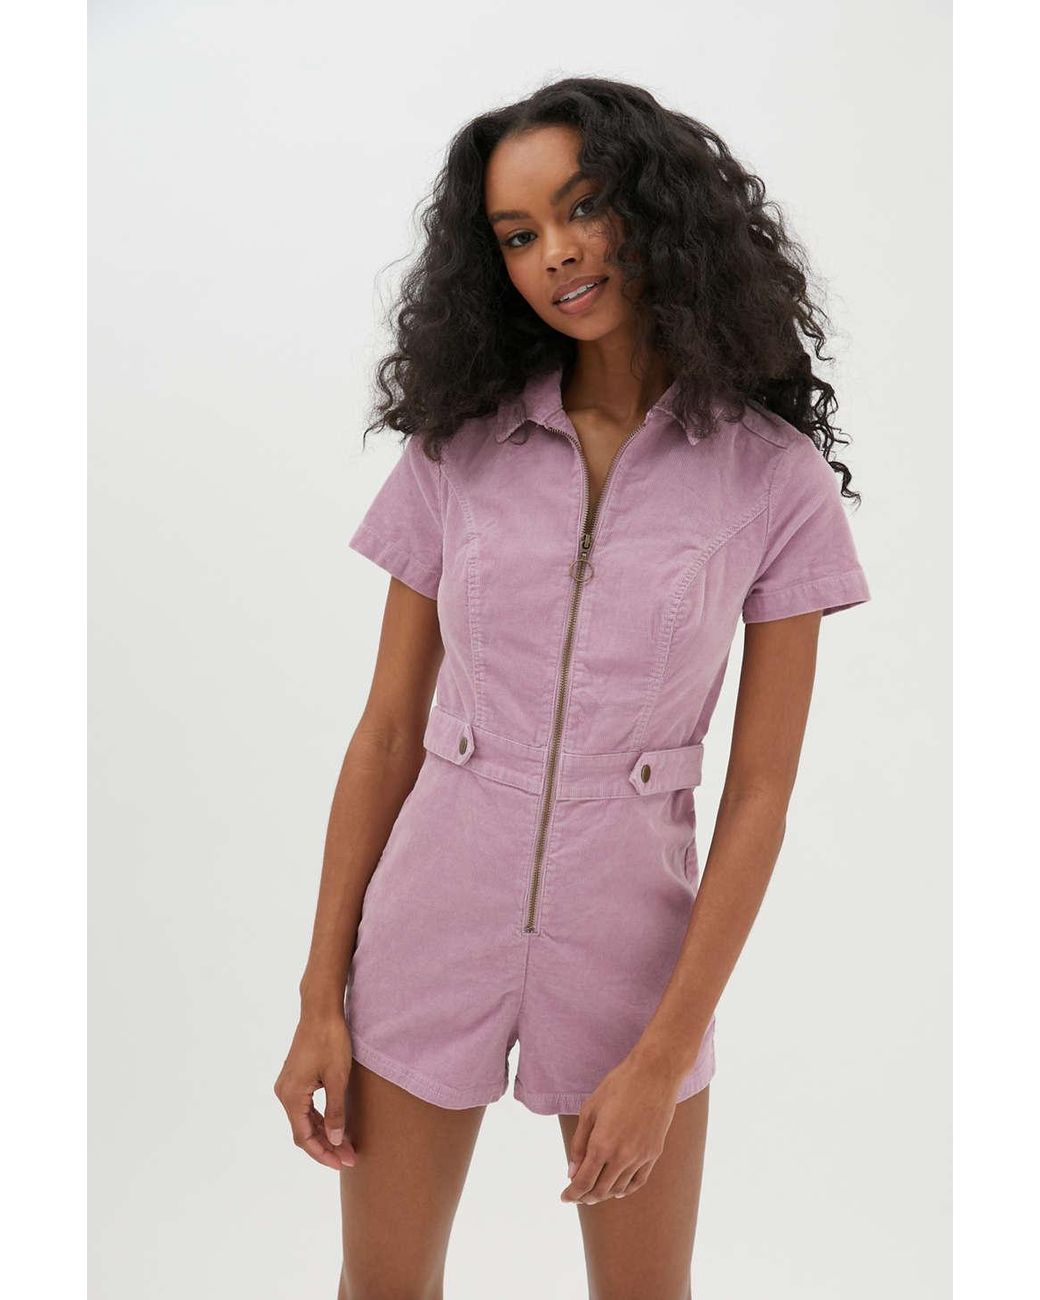 Urban Outfitters Uo Tyson Zip-front Short Sleeve Romper in Purple | Lyst